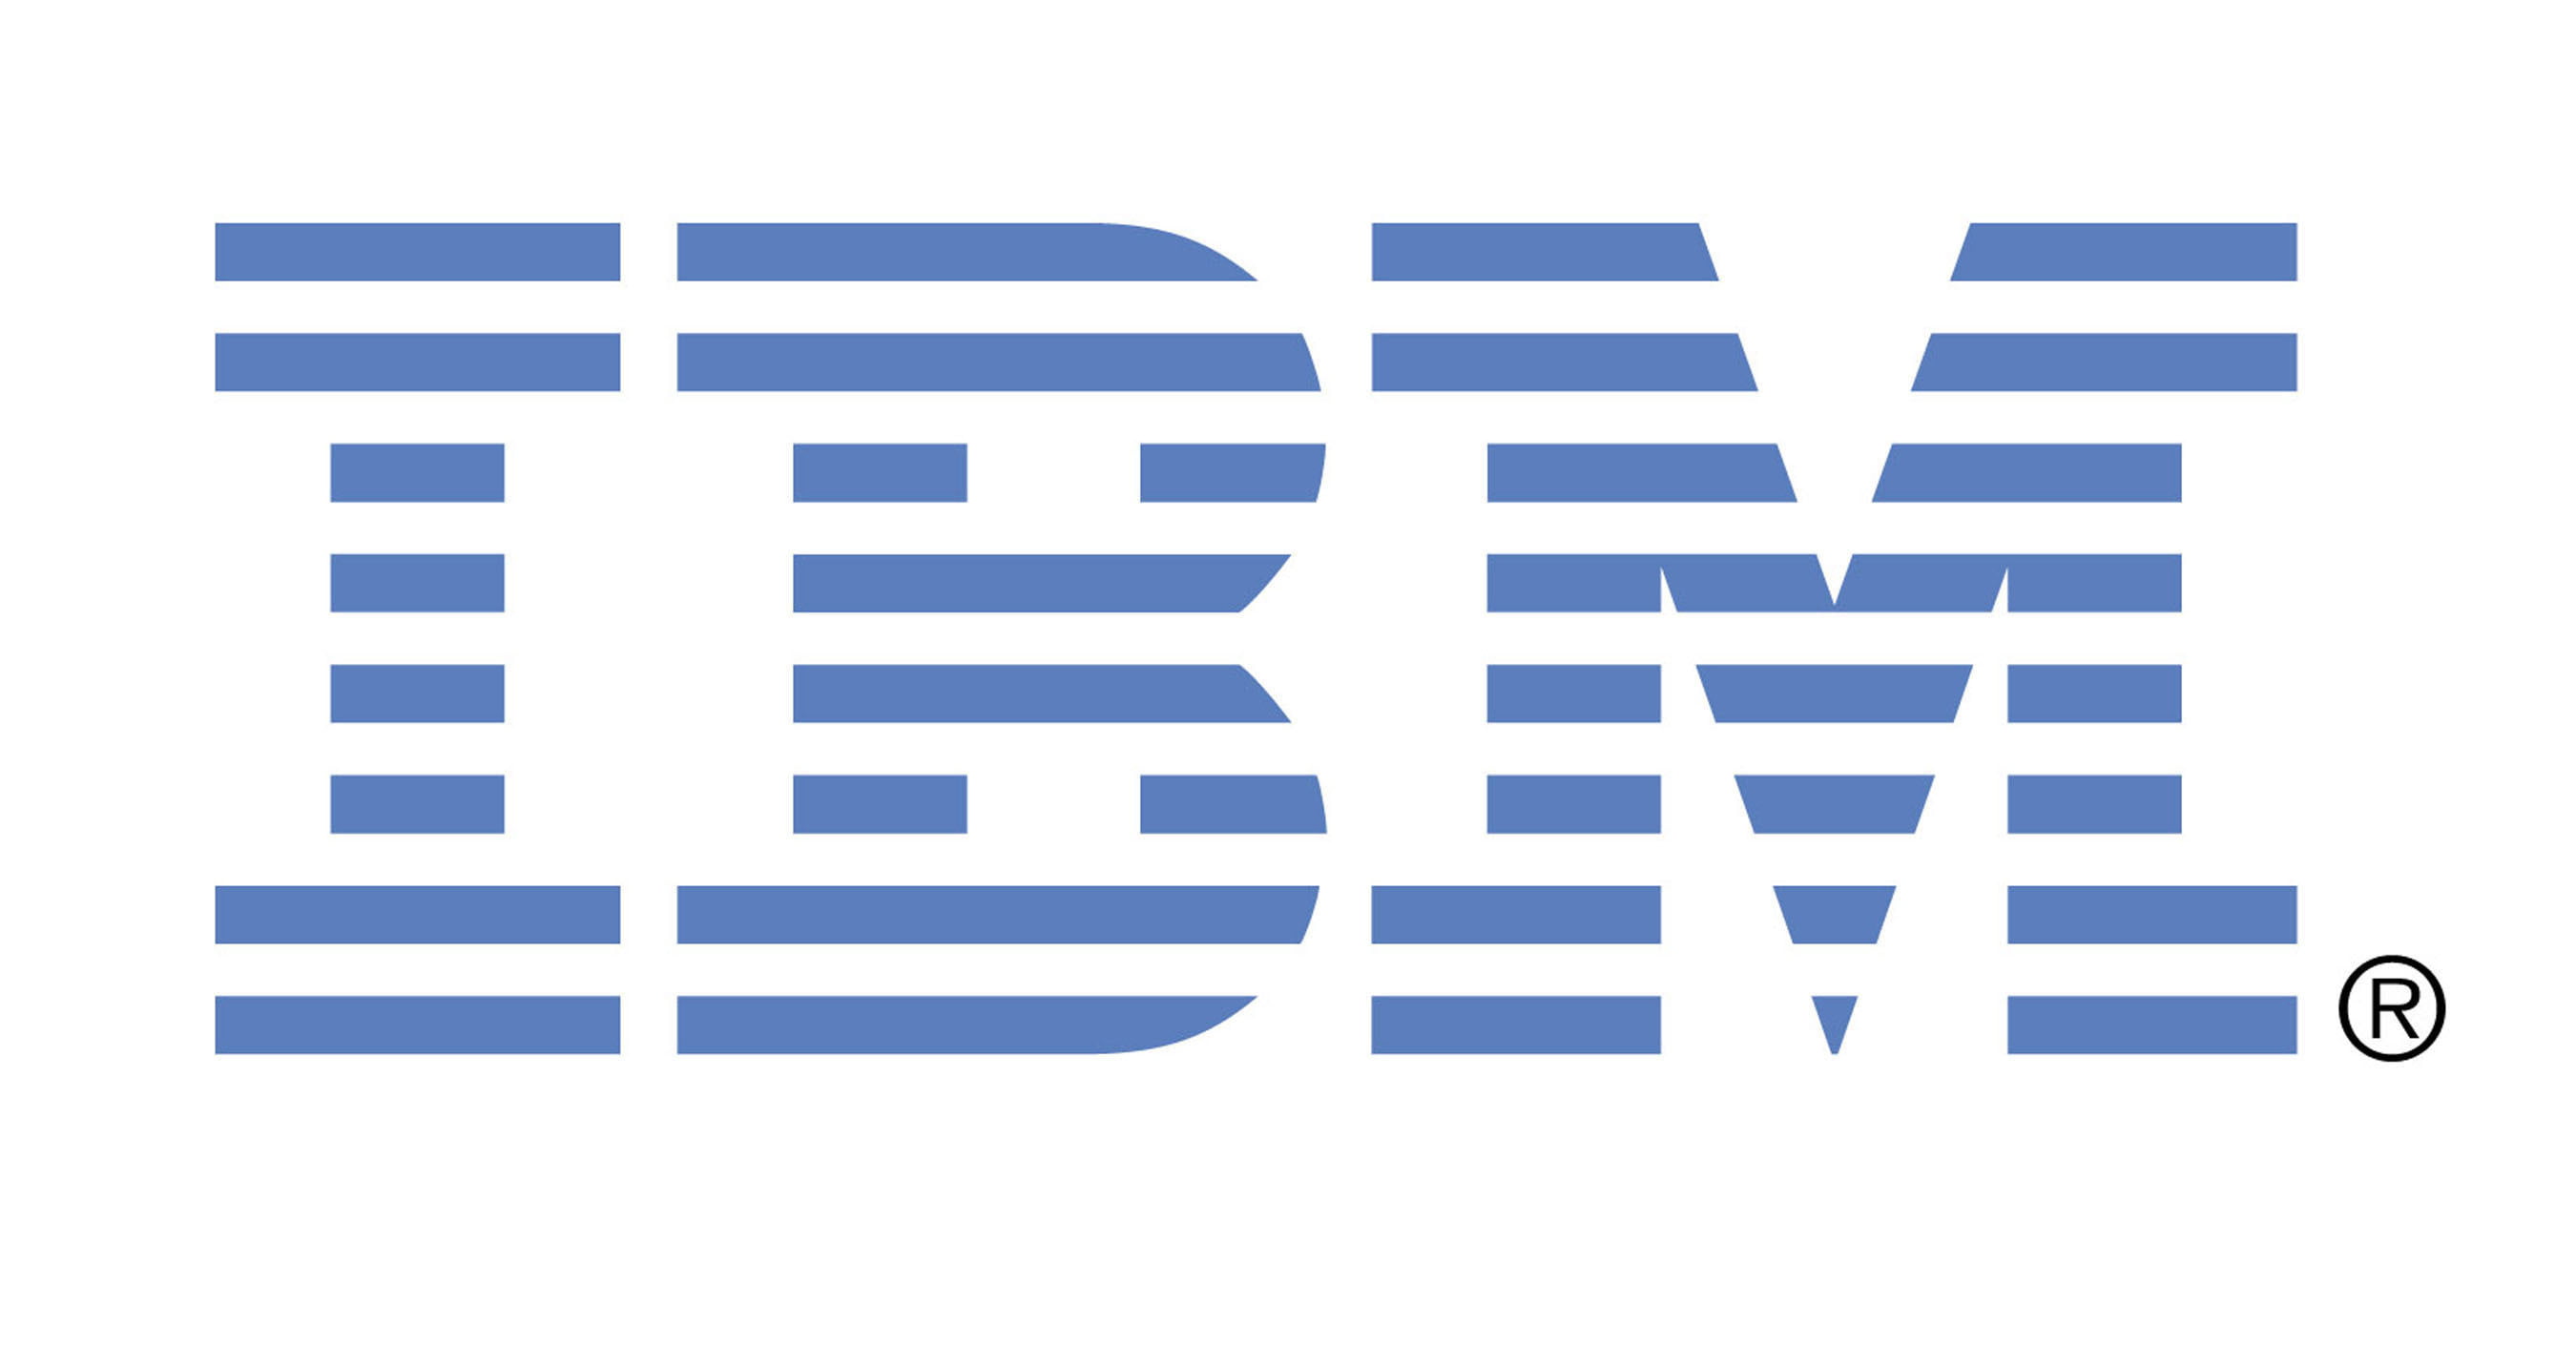 IBM: The Blockchain Will Change Business